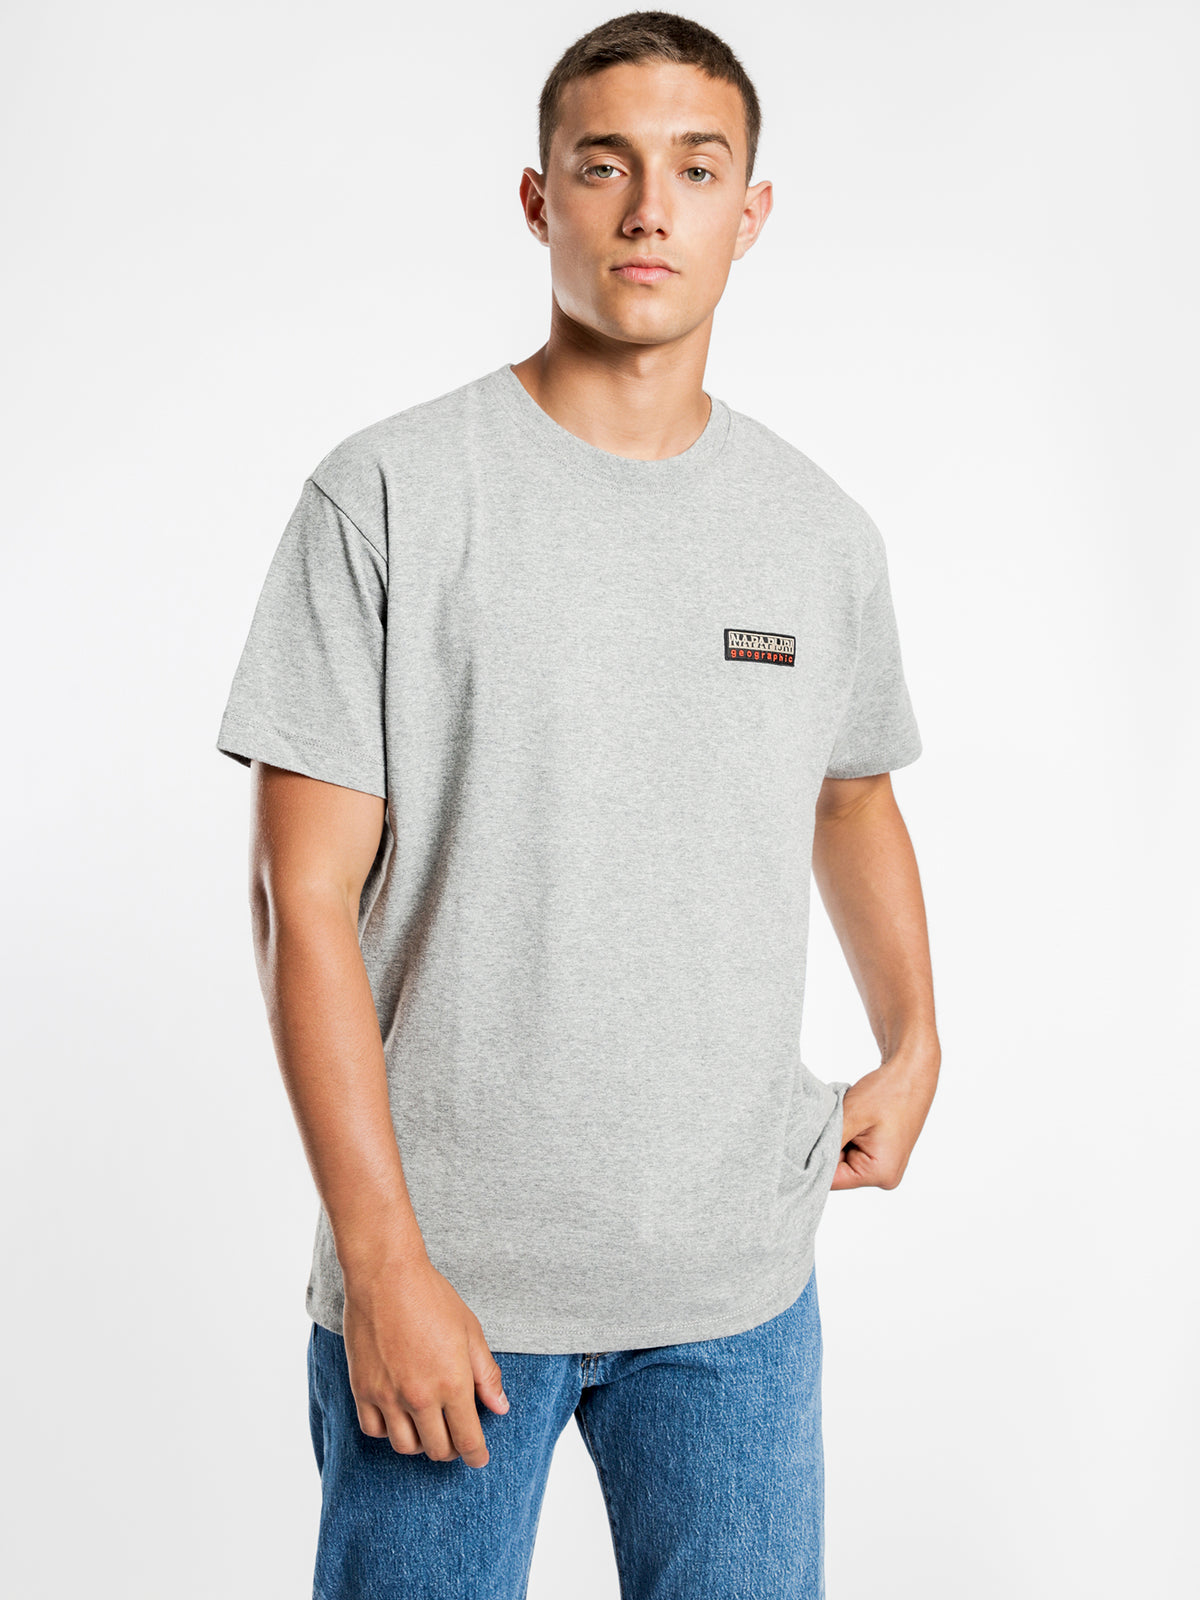 Sase Short Sleeve T-Shirt in Grey